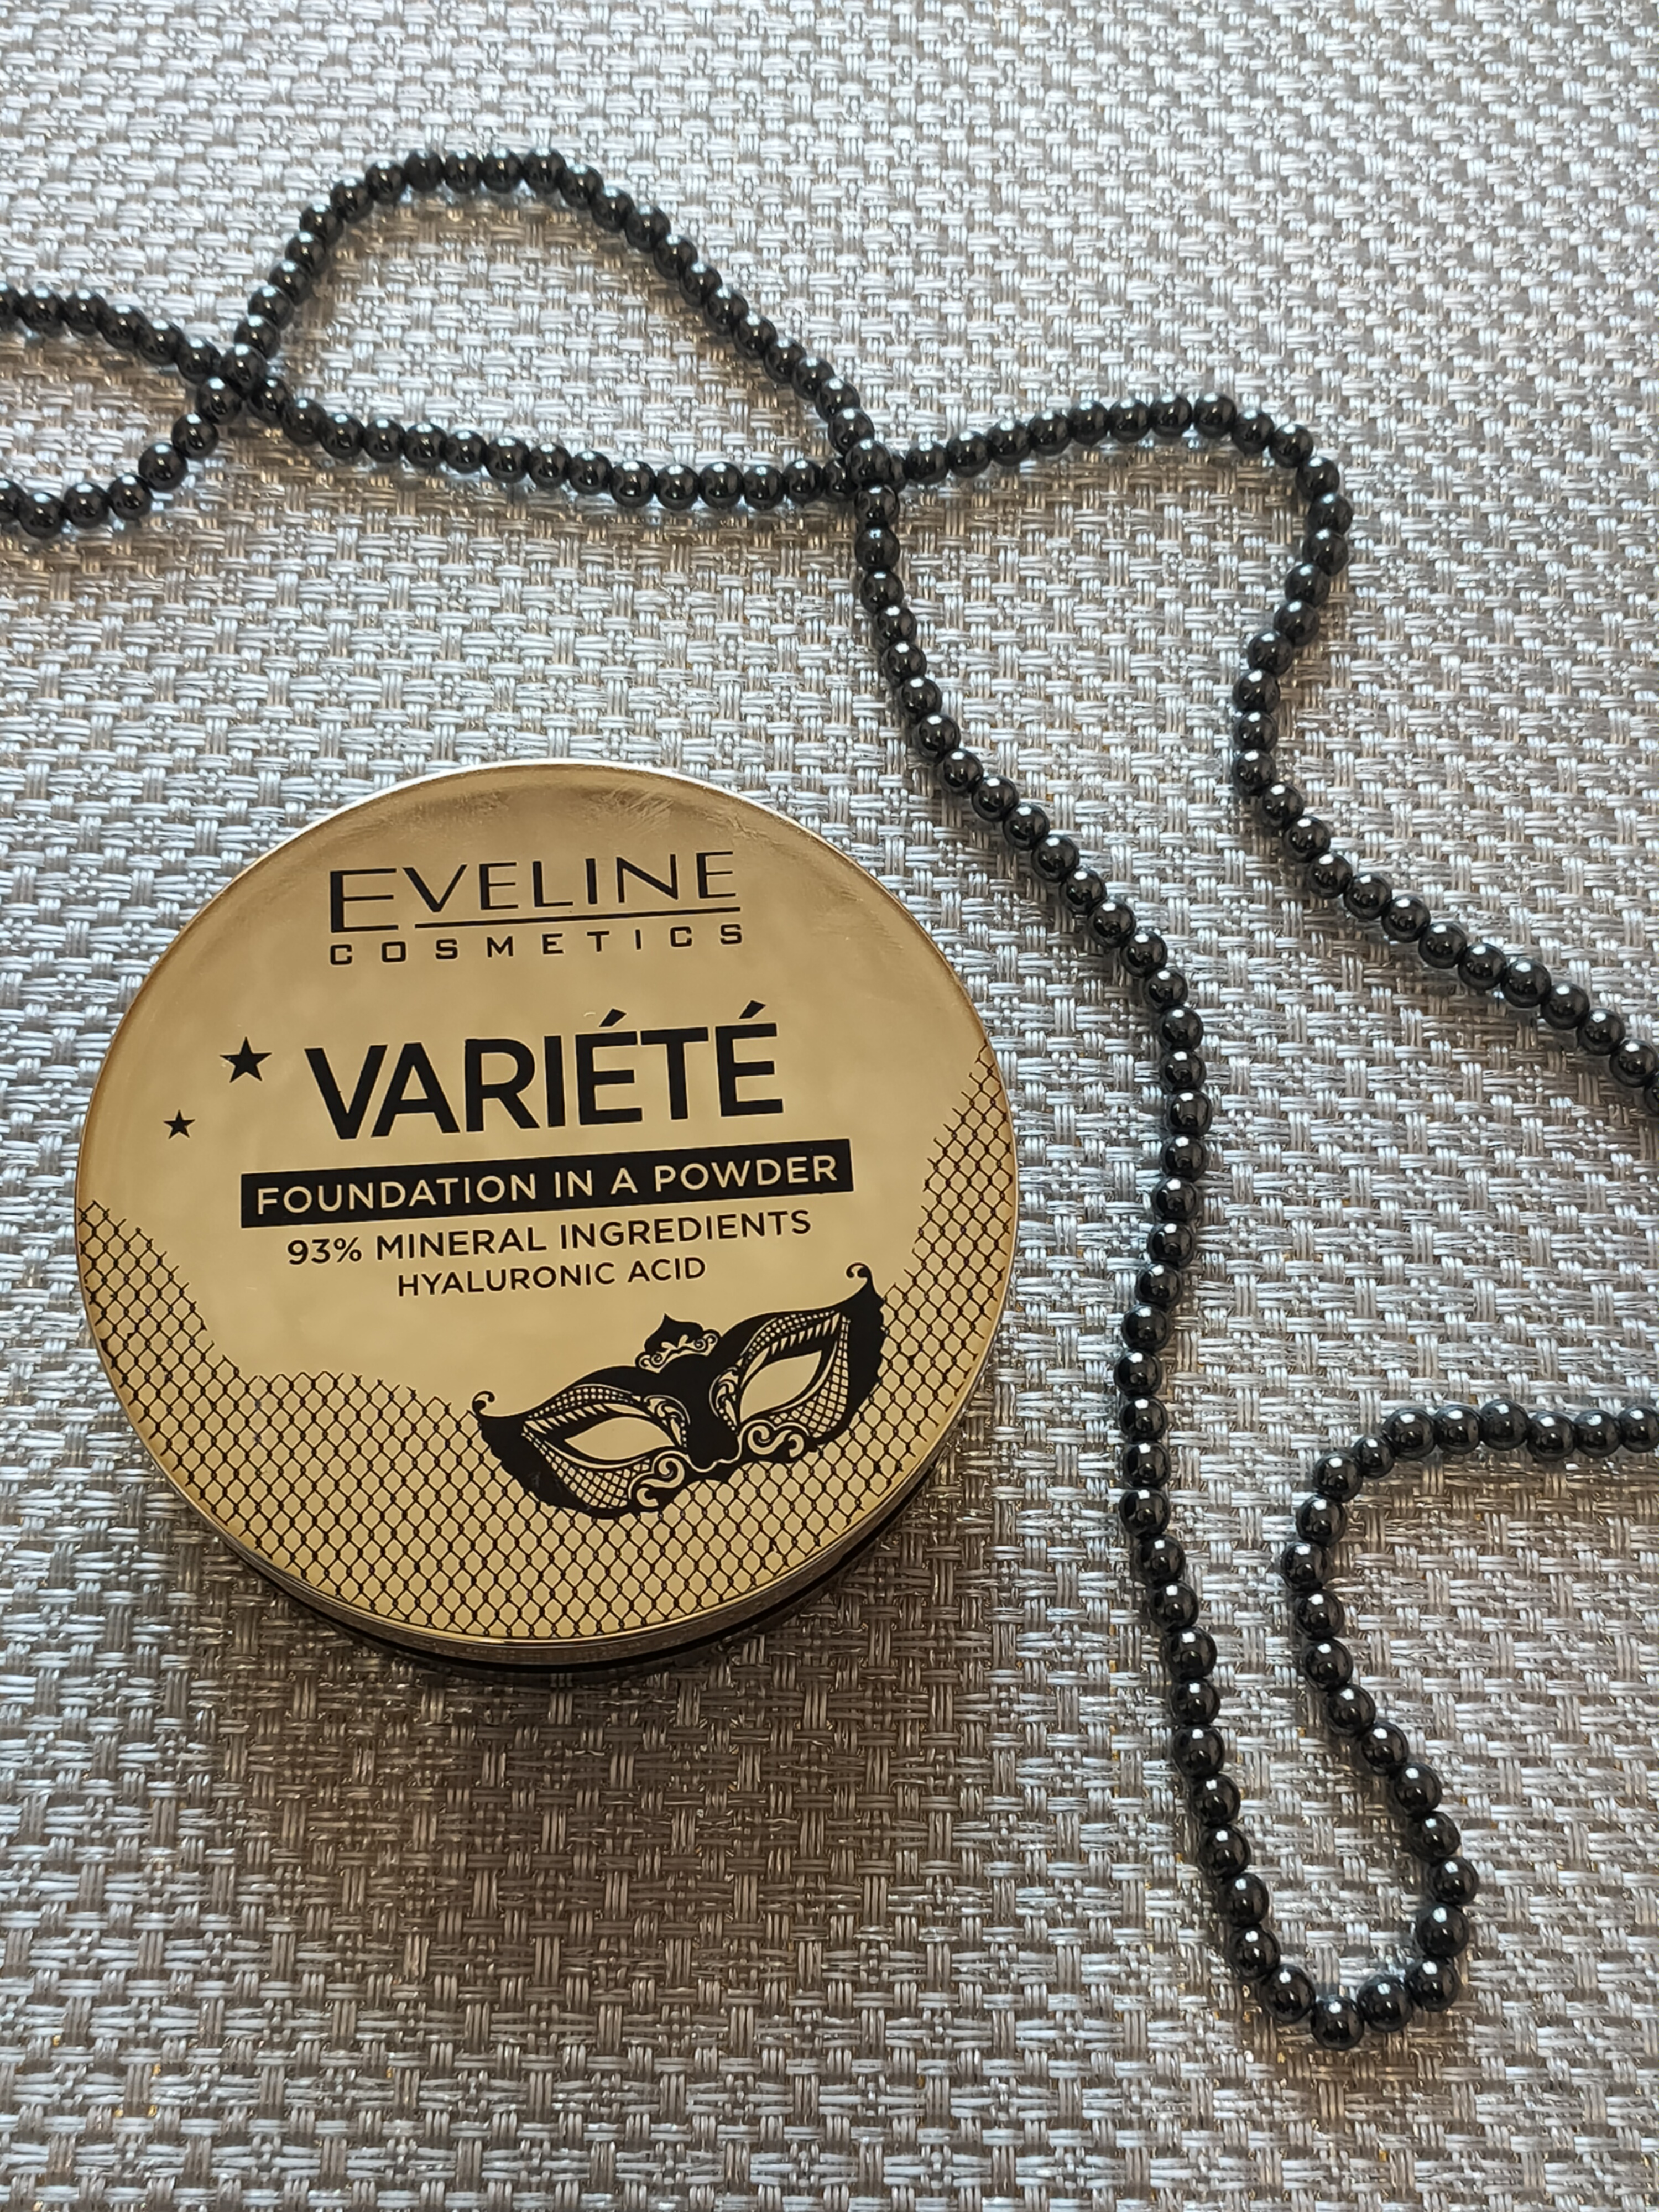 Eveline Cosmetics Variete Mineral Ingredients Powder Мінеральна компактна пудра